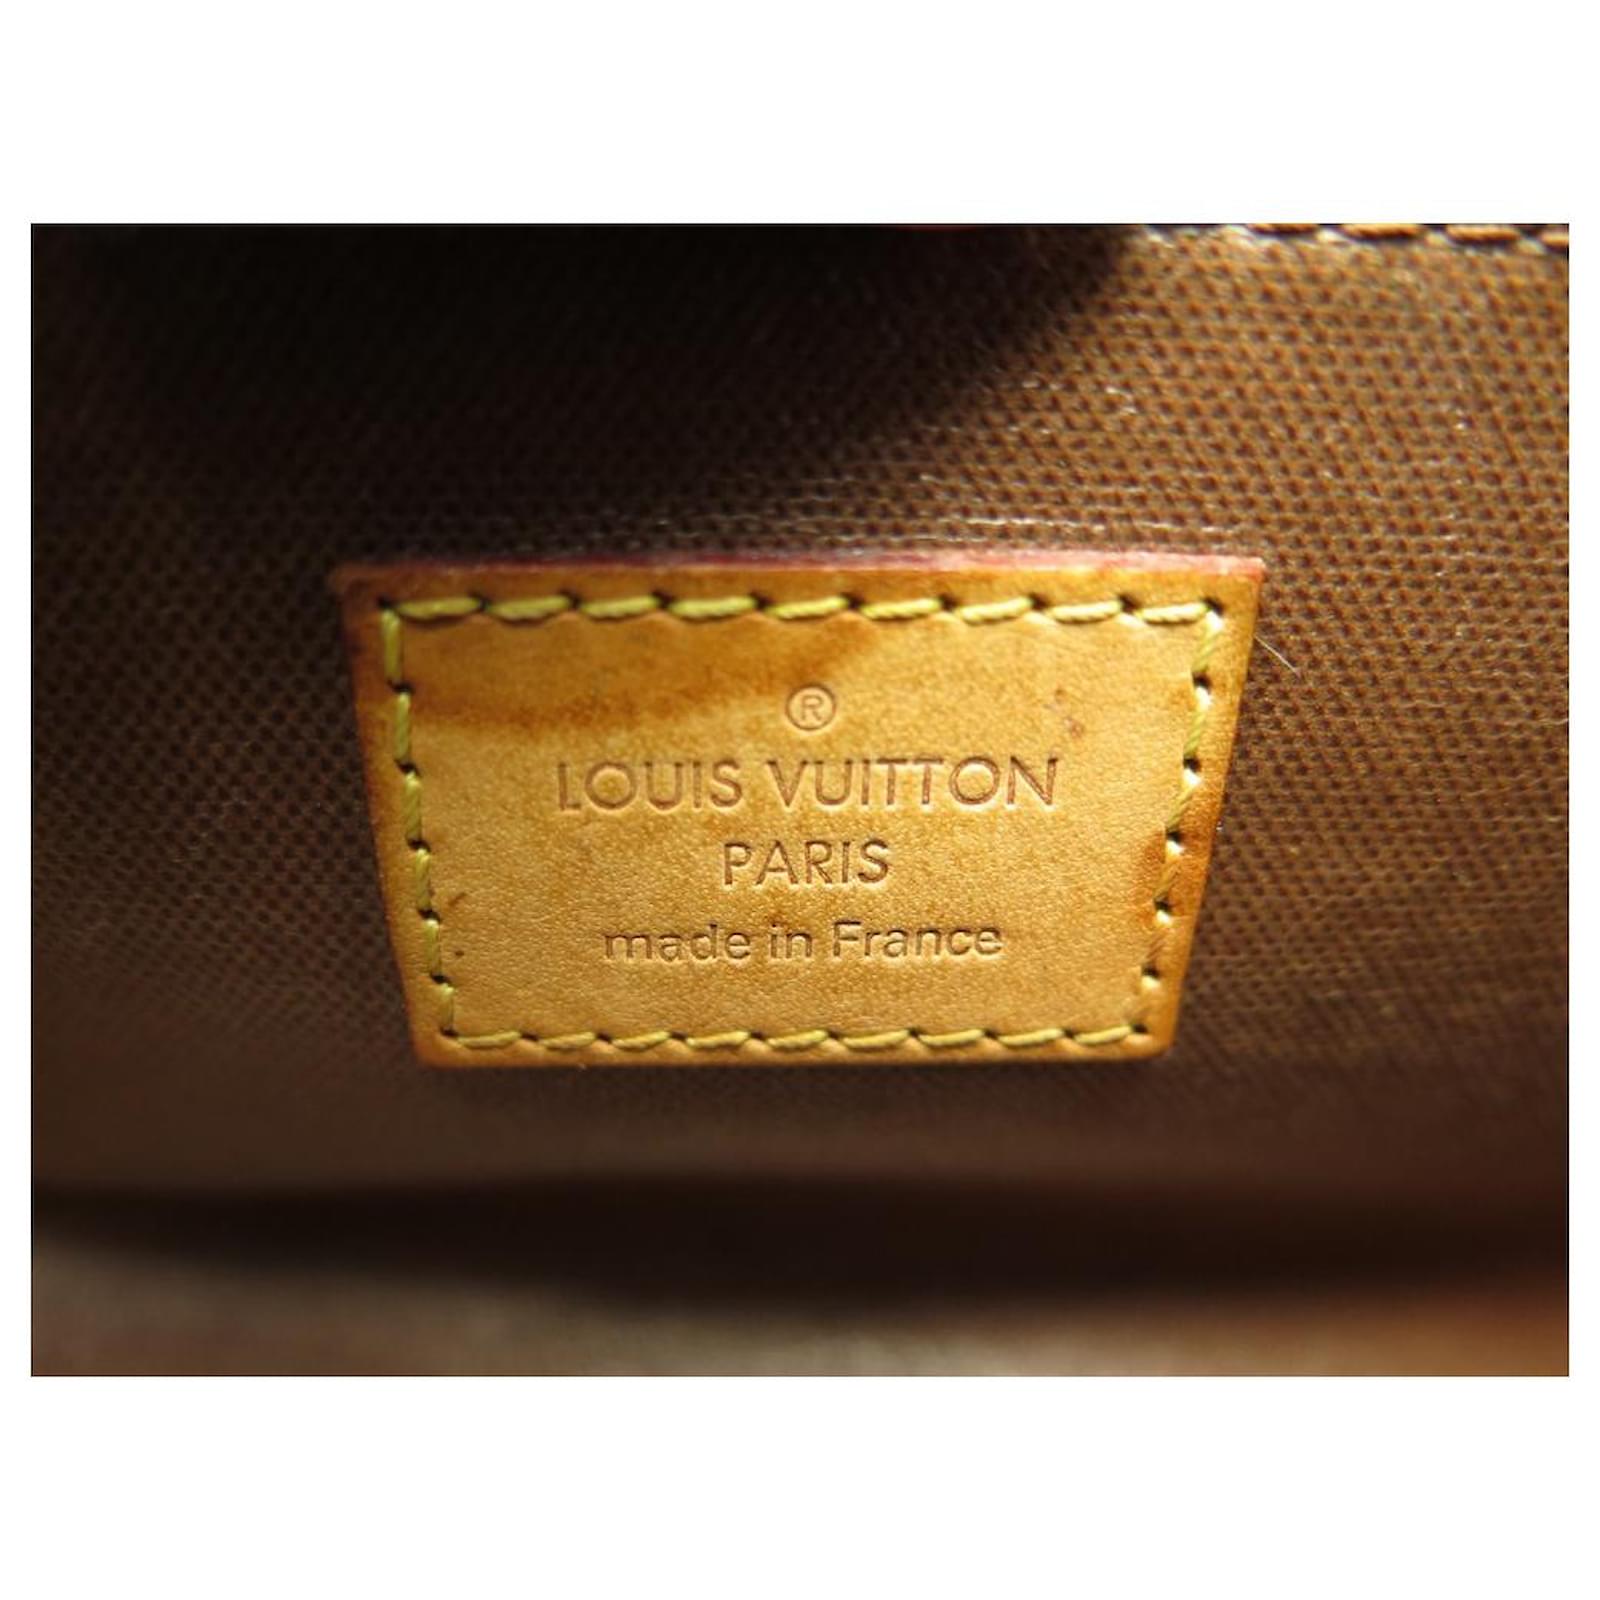 Louis Vuitton King Size Kulturtasche